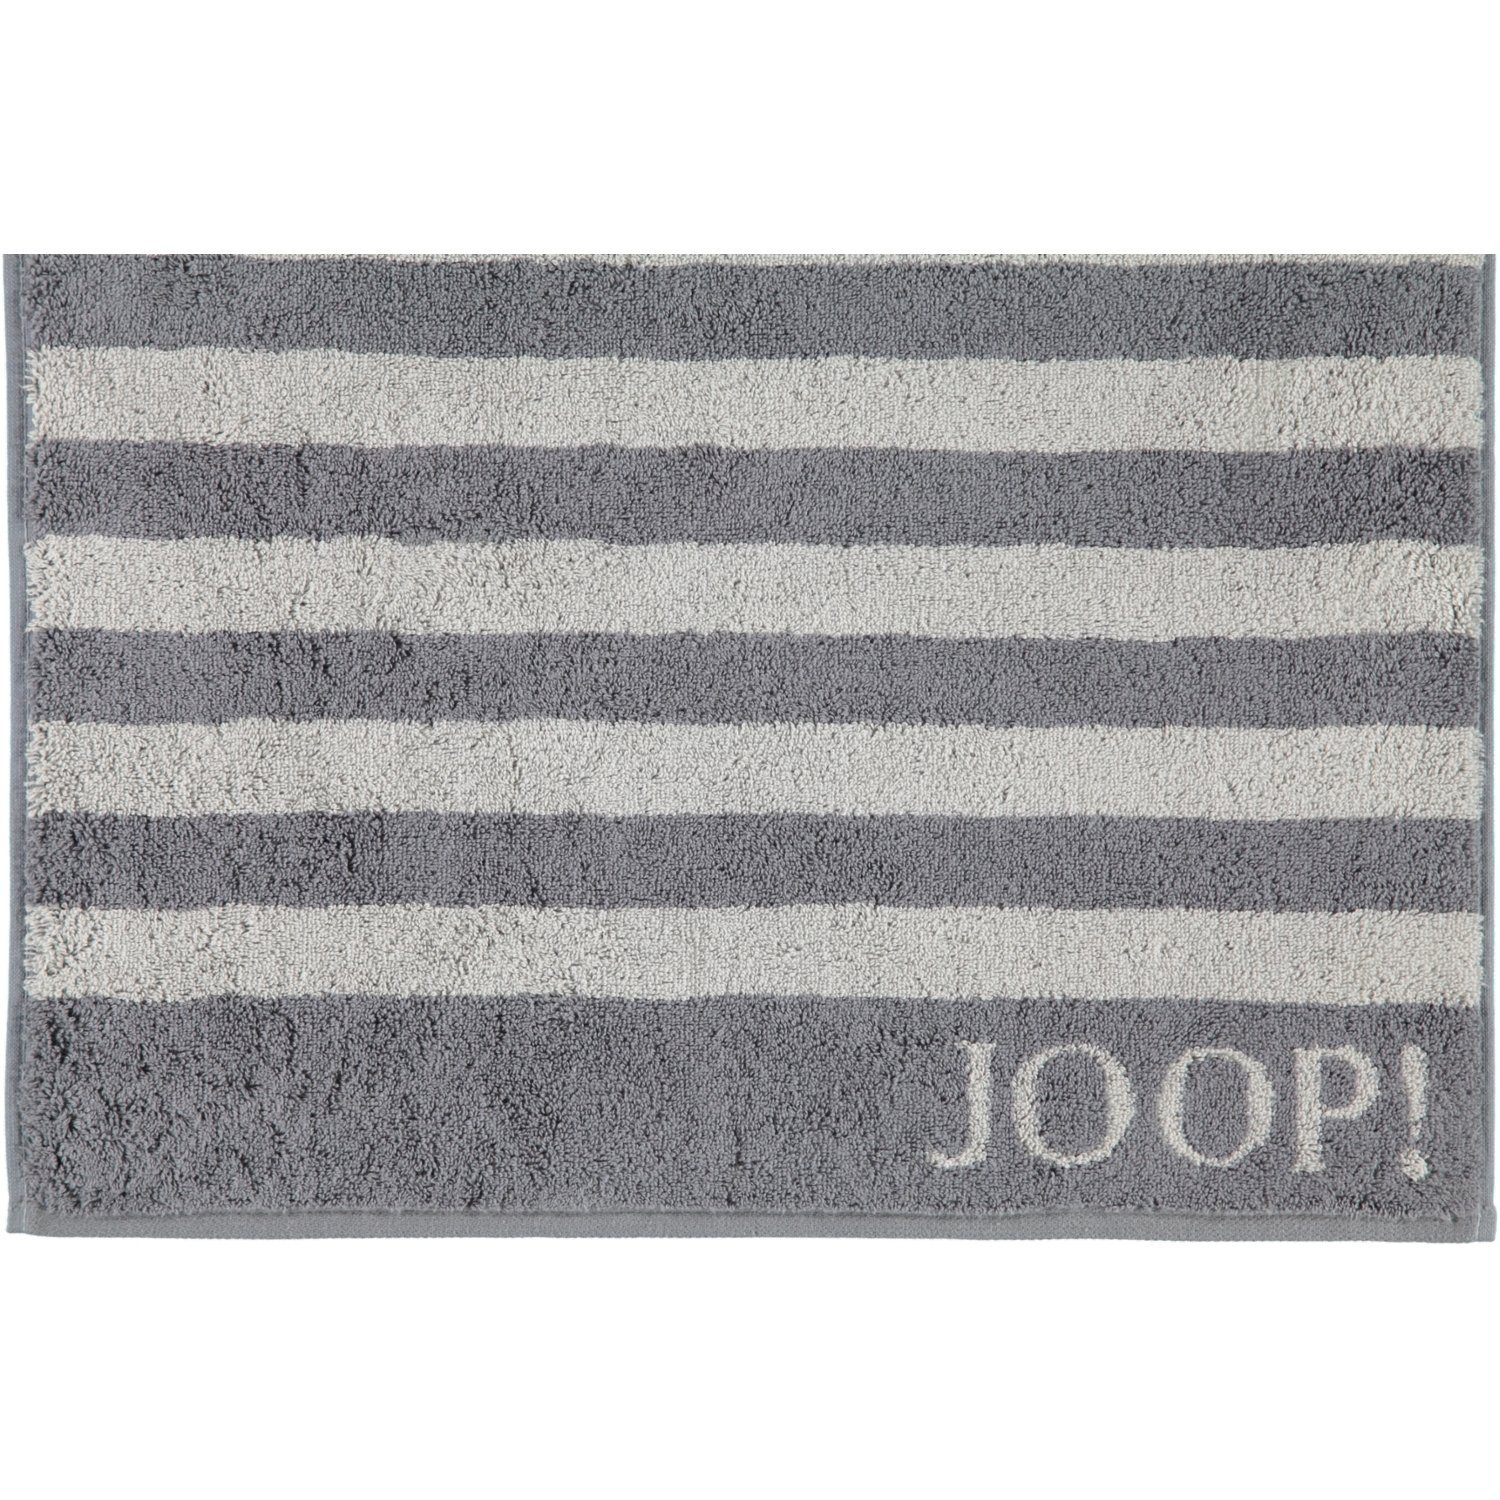 Joop! Handtücher Stripes Baumwolle 1610, (77) 100% Anthrazit Classic